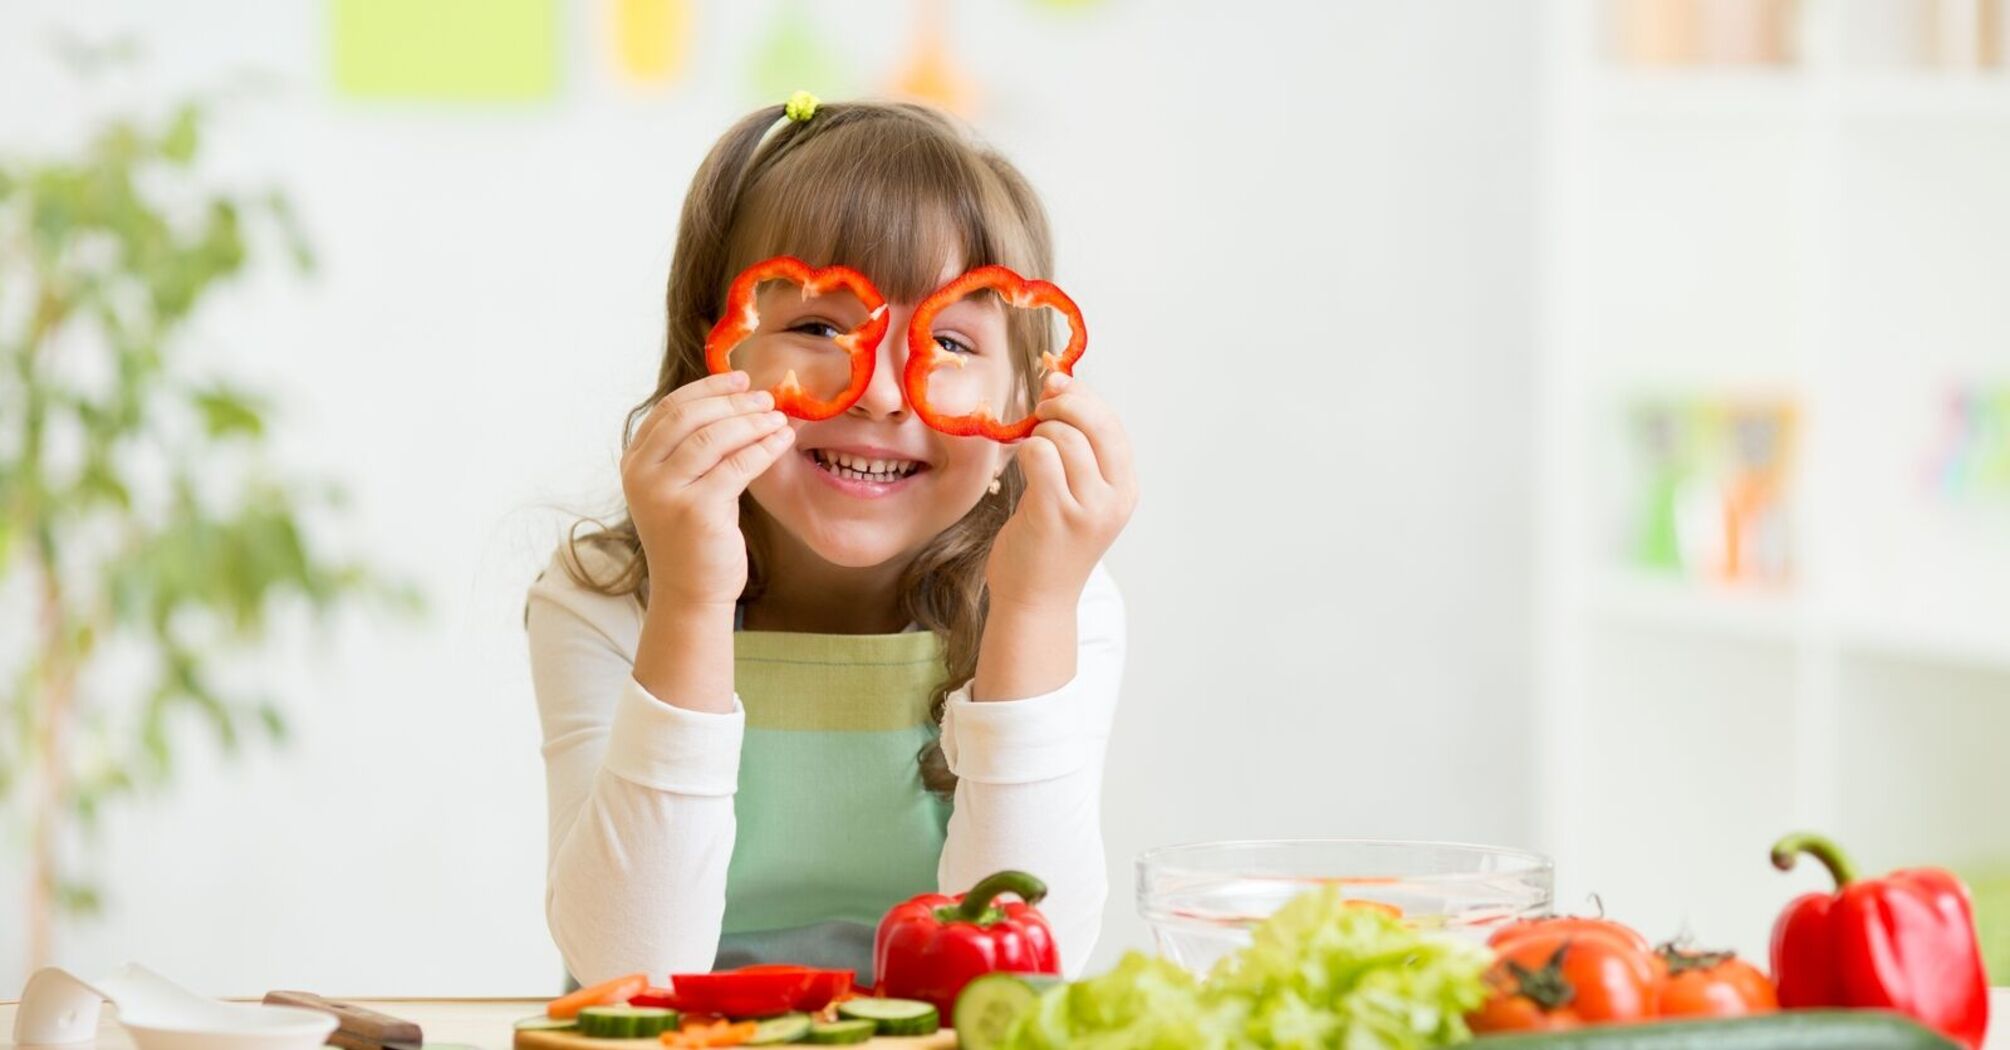 How to preserve good eyesight in children